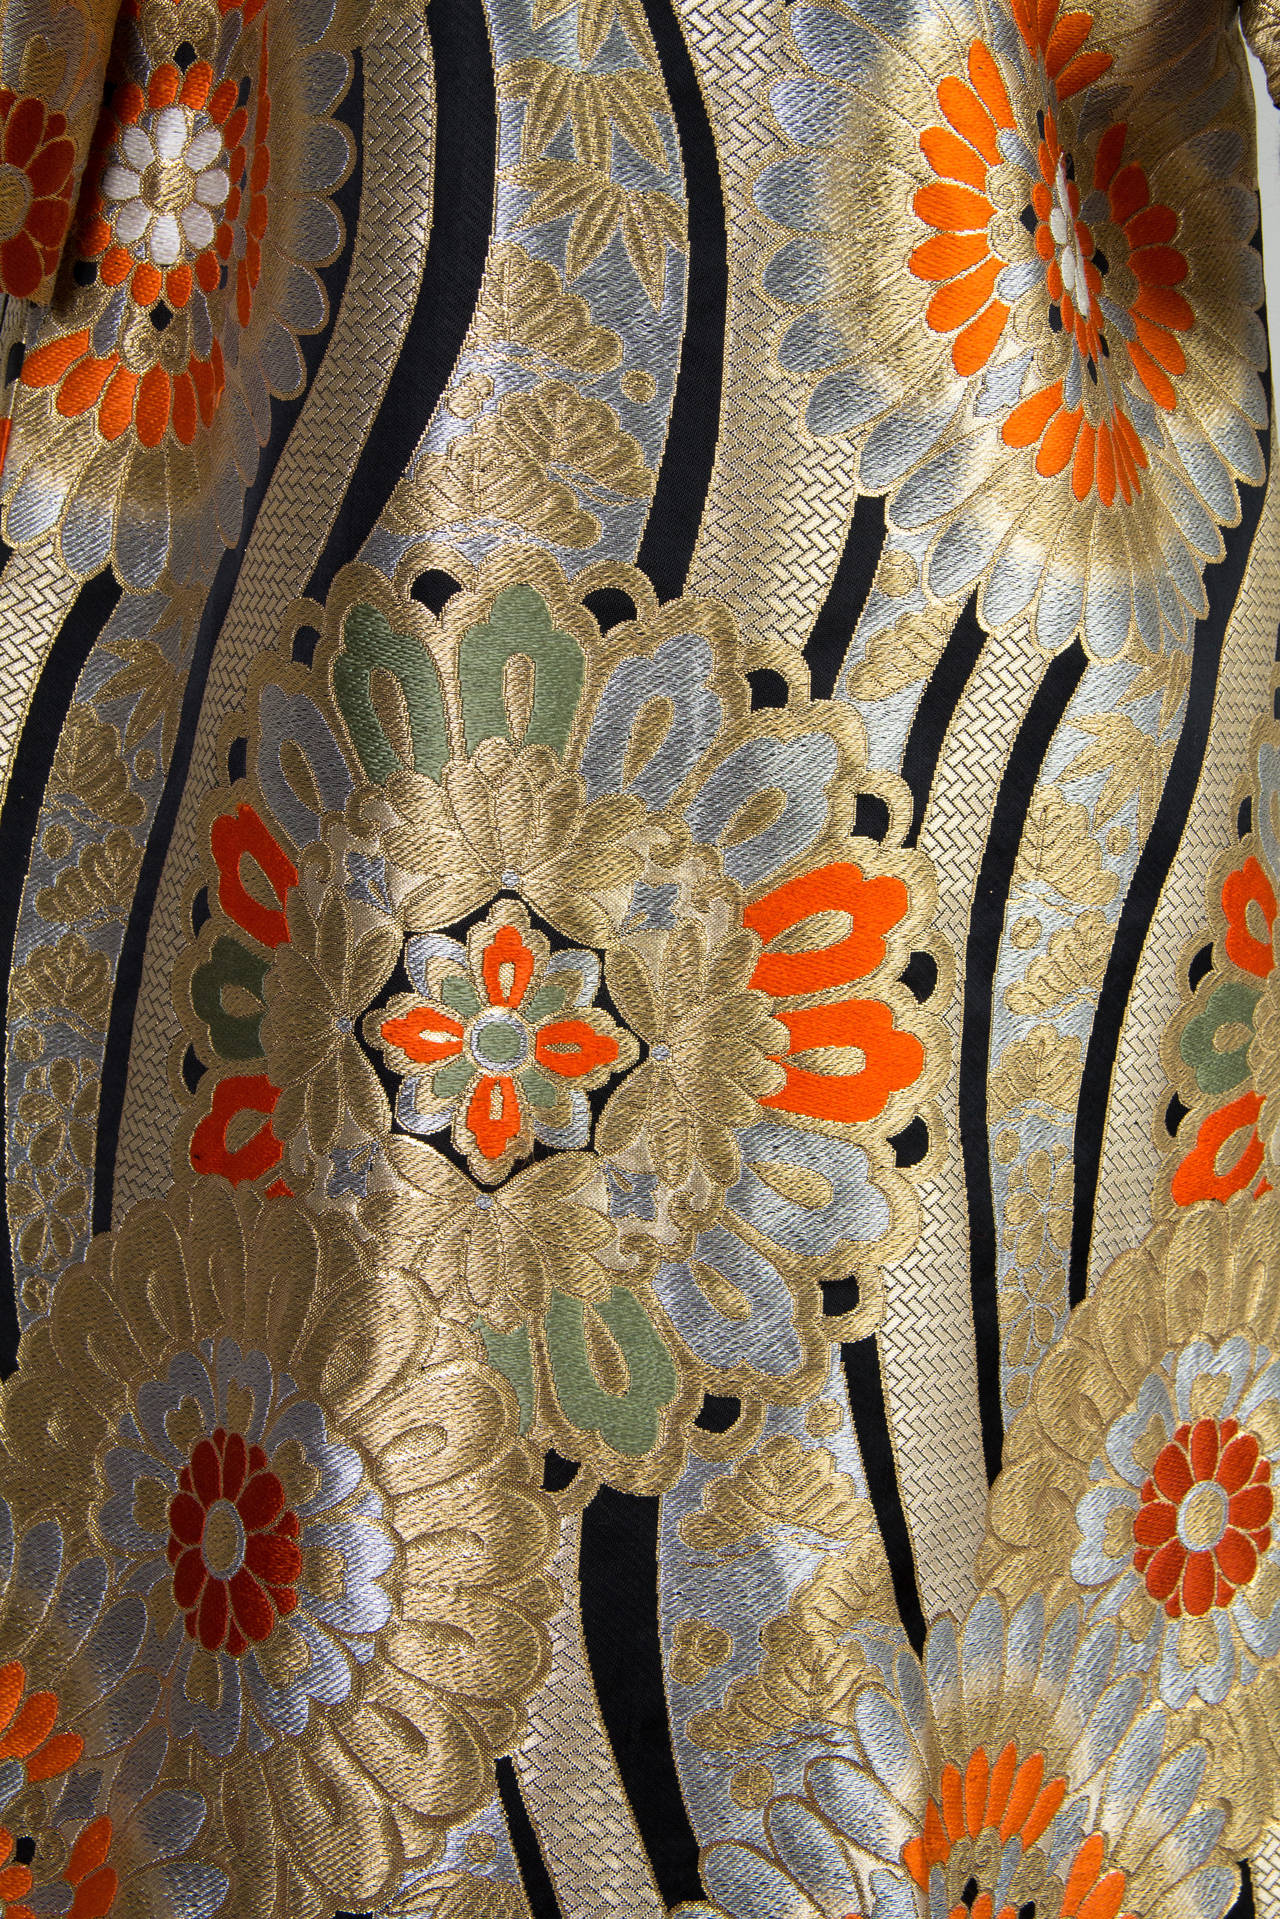 Women's 1960s Coat Made from Gold Shōwa Era Japanese Obi Fabric